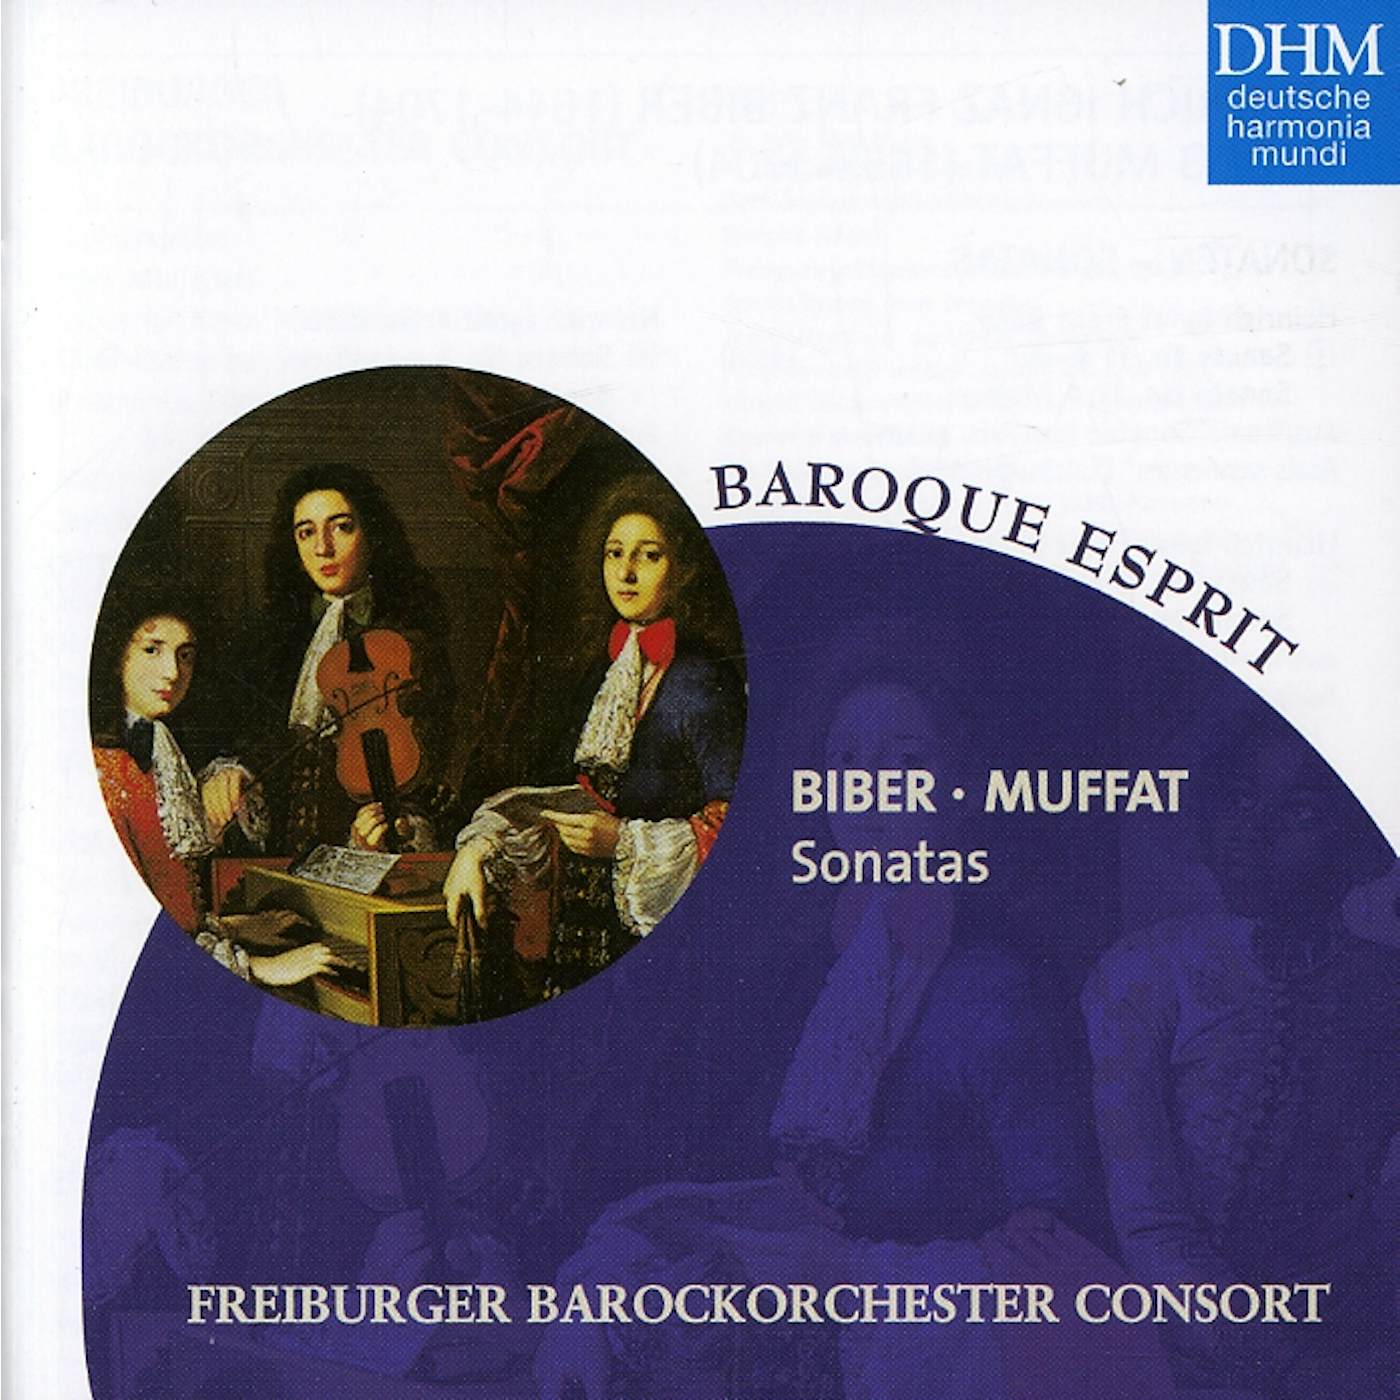 Freiburger Barockorchester BIBER, MUFFAT: SONATAS CD